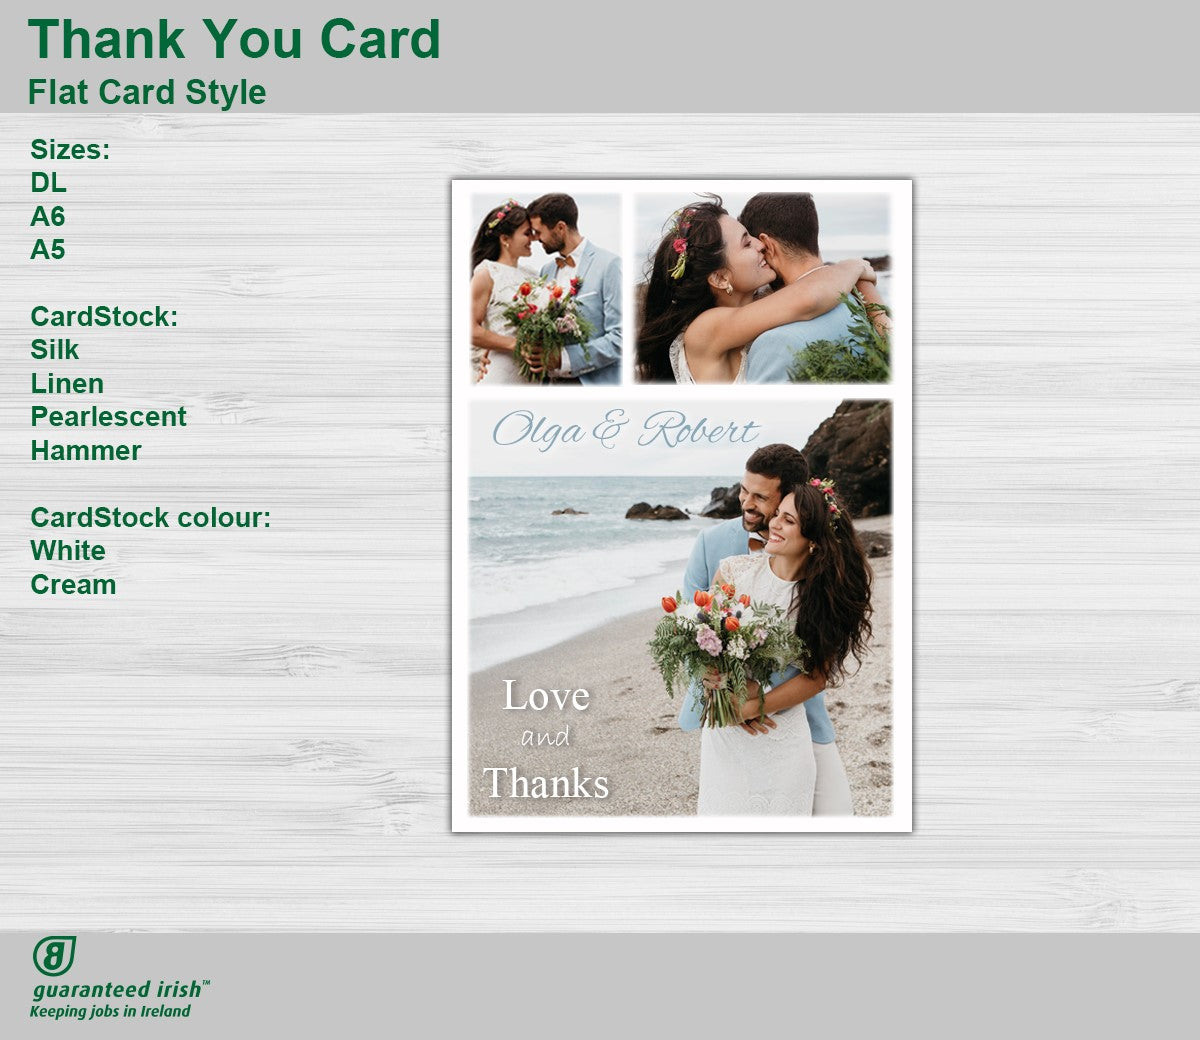 Wedding Thank You Cards - Flat